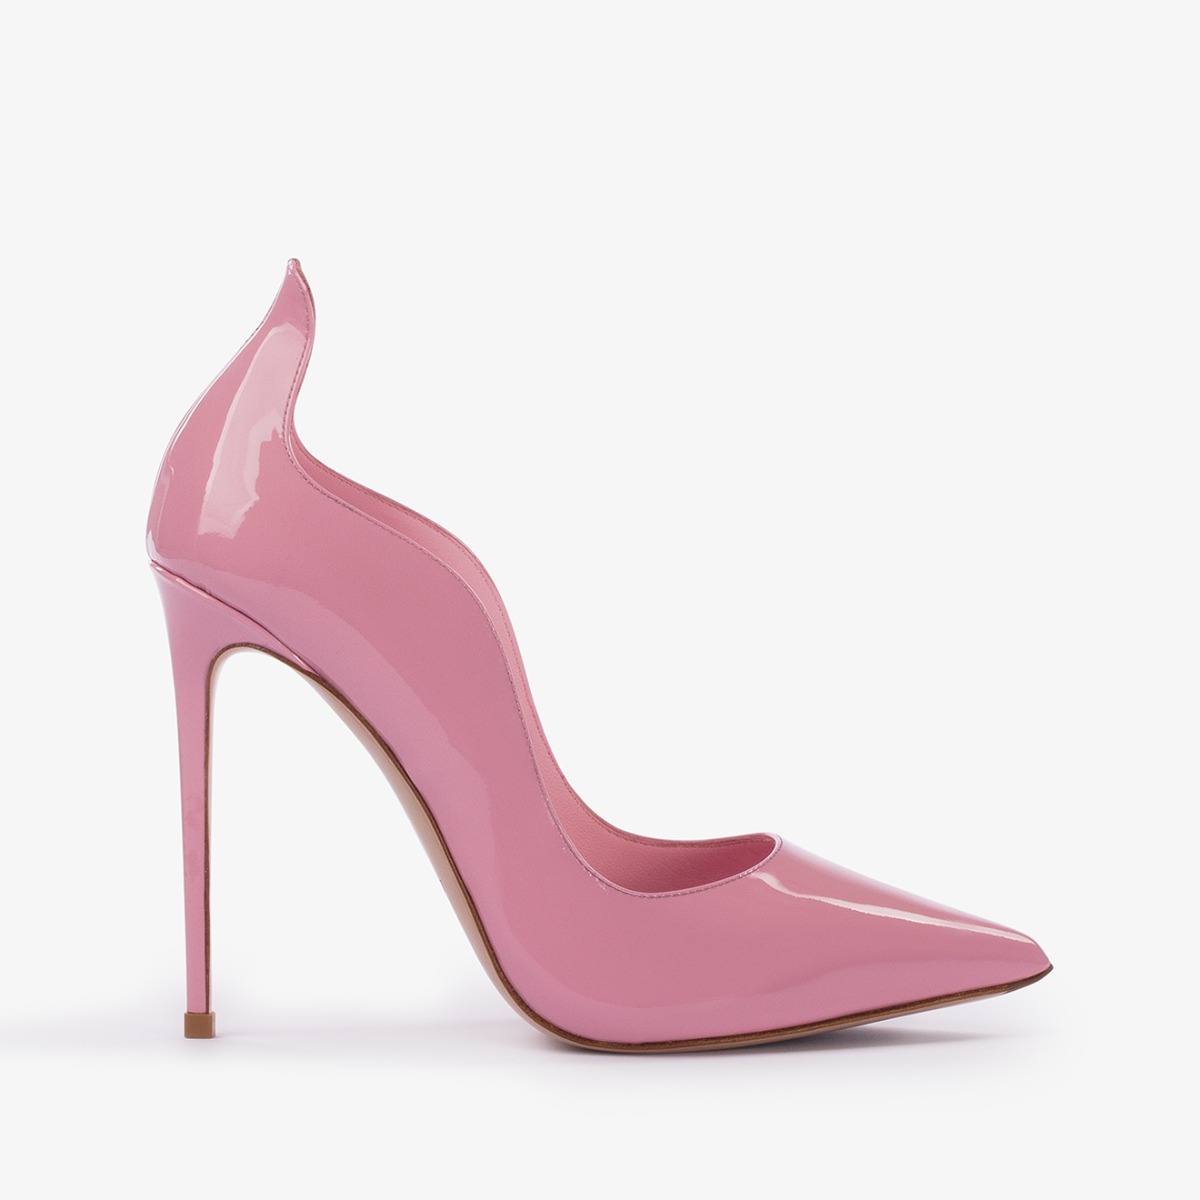 Goddess pink patent leather pump - Le Silla